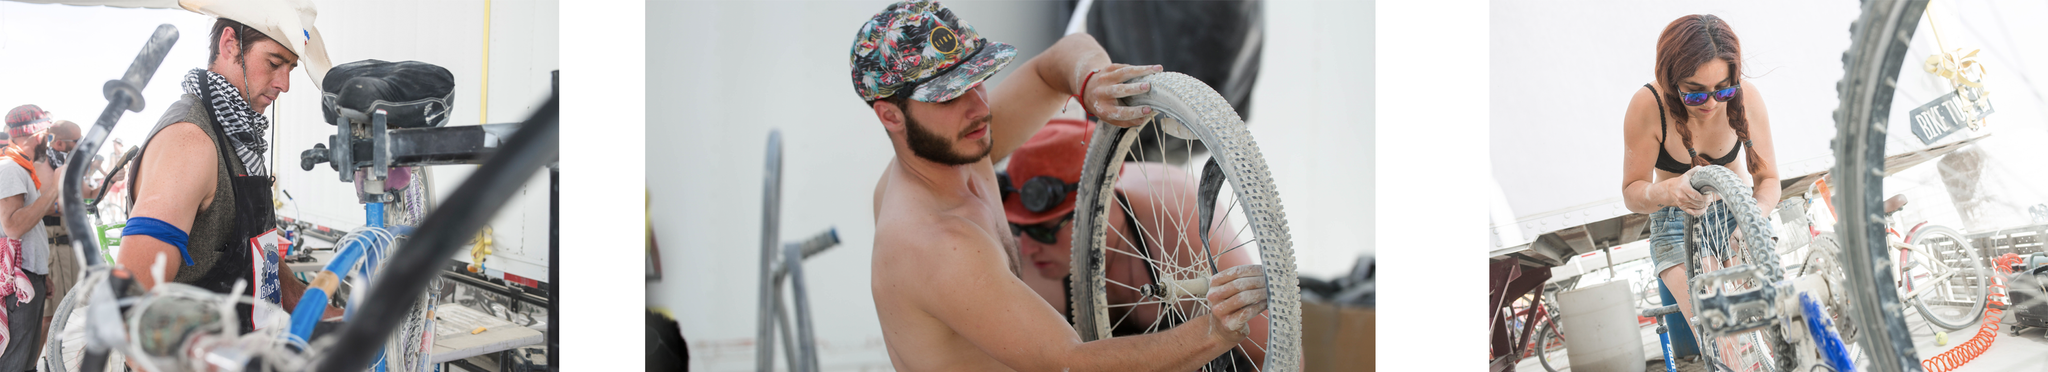 Volunteer Repairing a Bike for Free